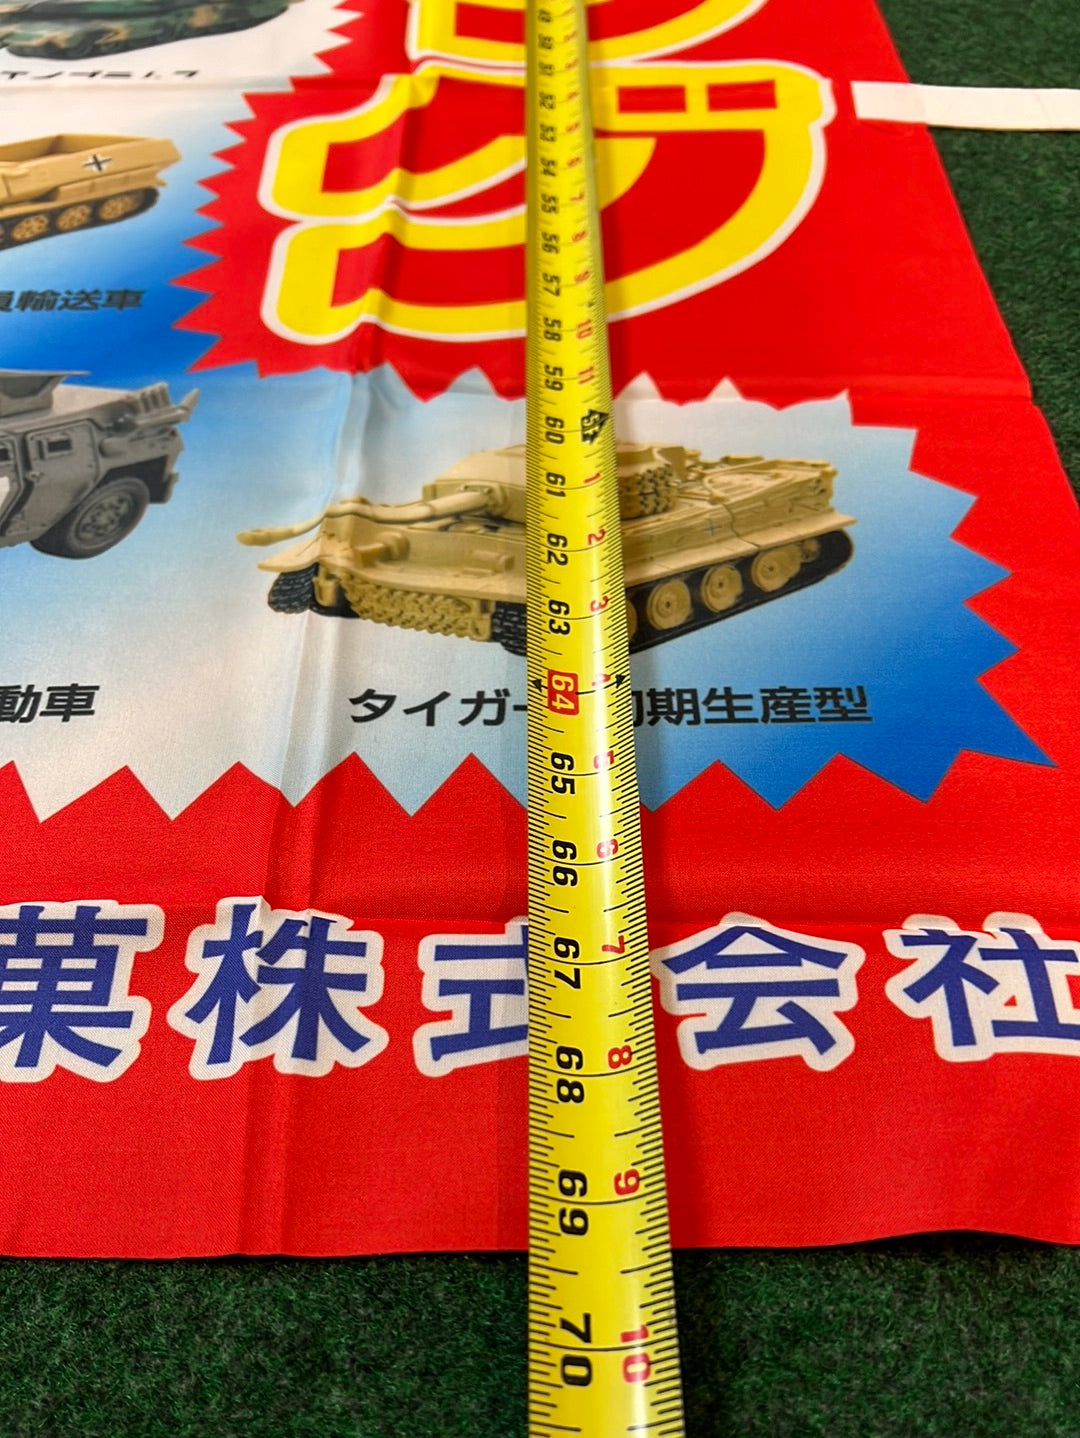 Furuta Choco Egg - Combat Vehicle & Tank Advertising Nobori